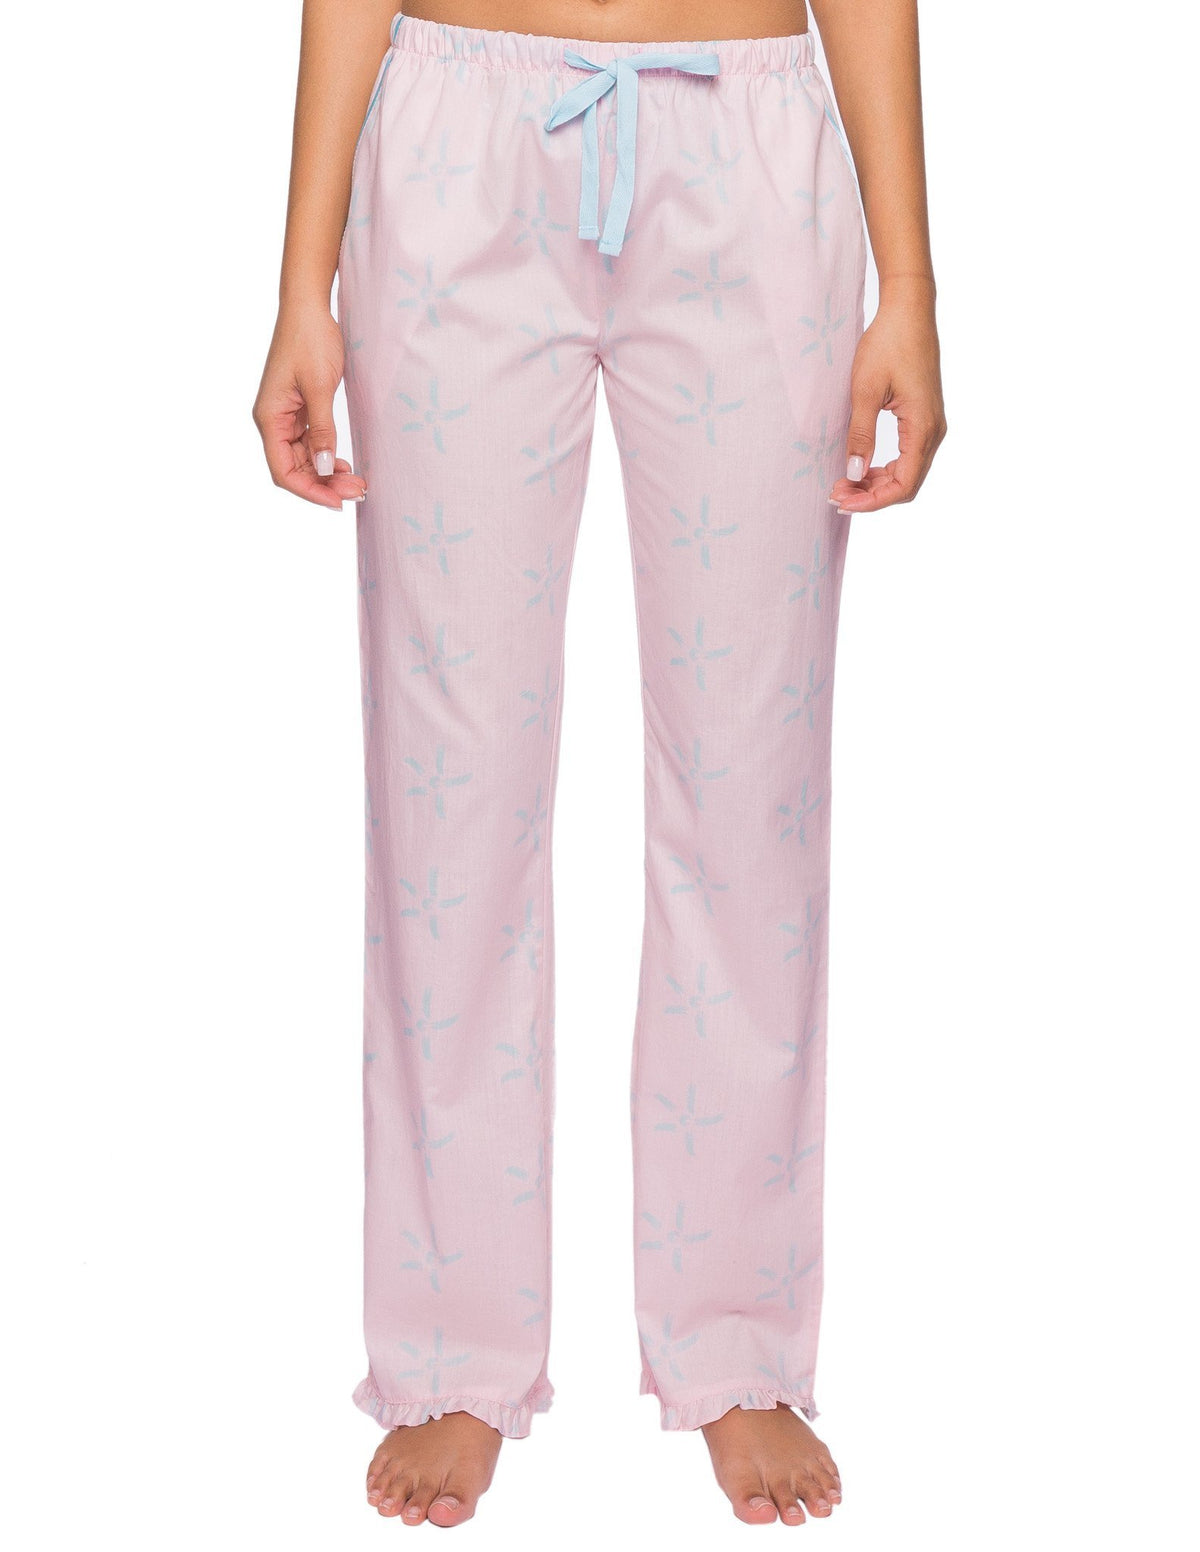 Womens Premium 100% Cotton Poplin Lounge/Sleep Pants - Starlight - Pink/Aqua